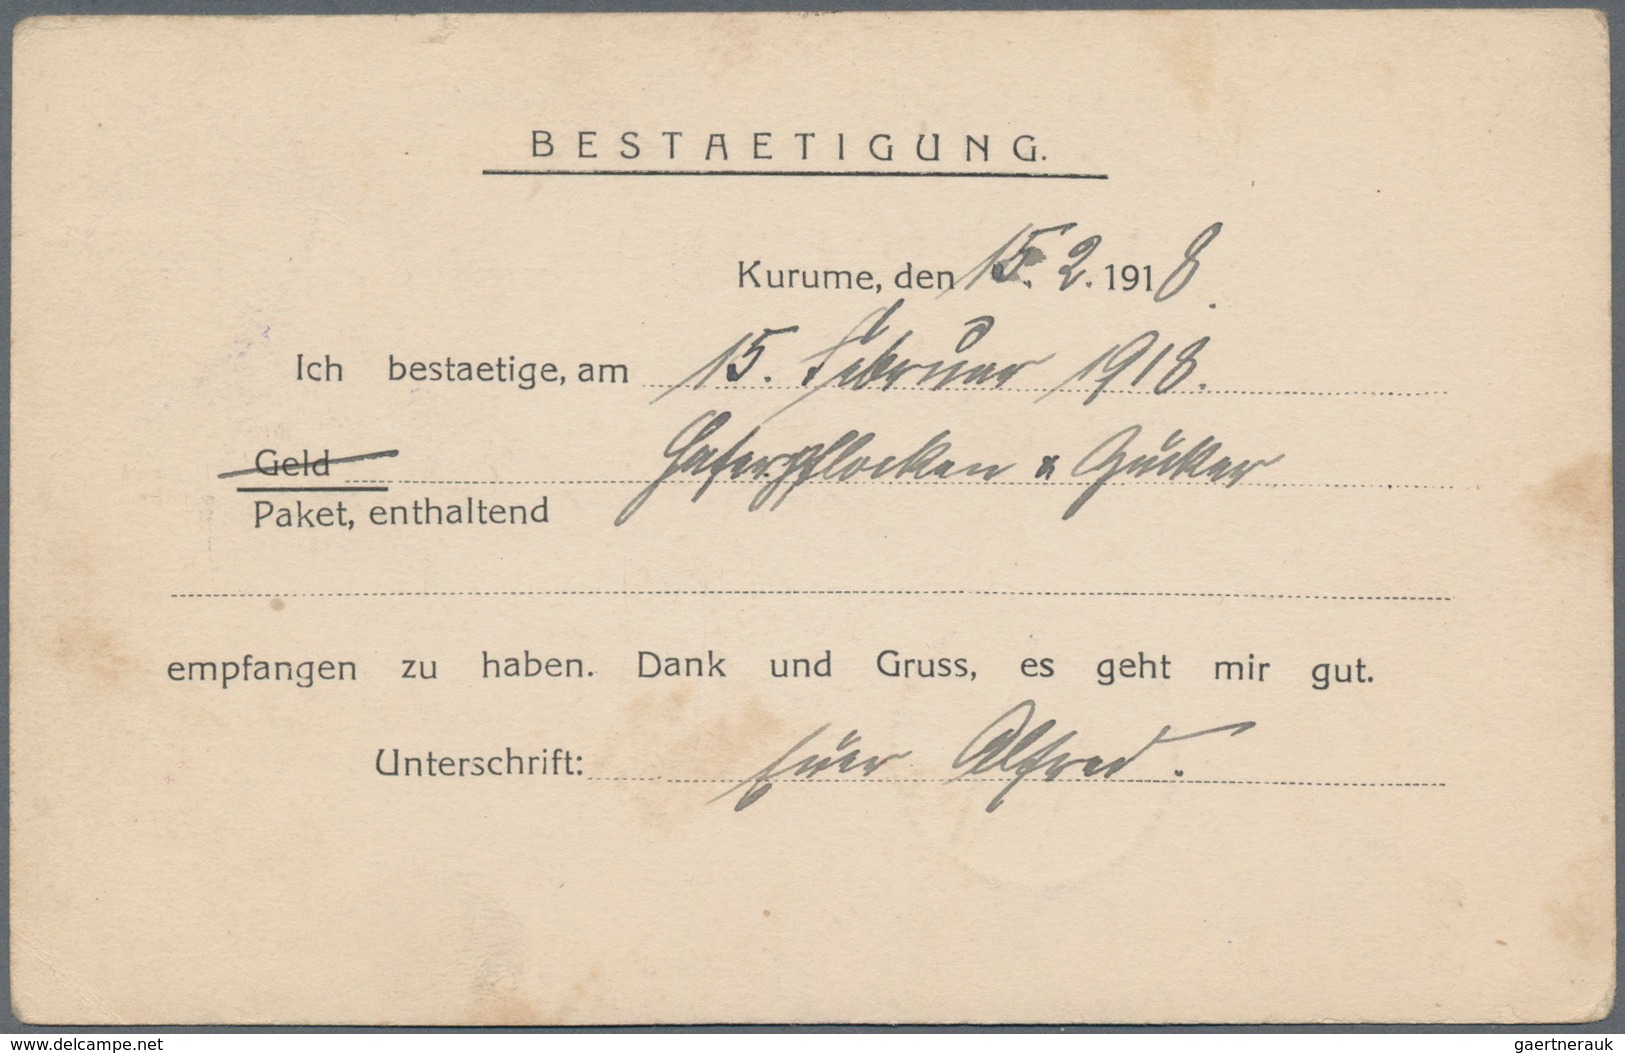 Deutsche Kolonien - Kiautschou - Kriegsgefangenenpost: 1916/1919, 4 Karten aus den Lagern Ninoshima,